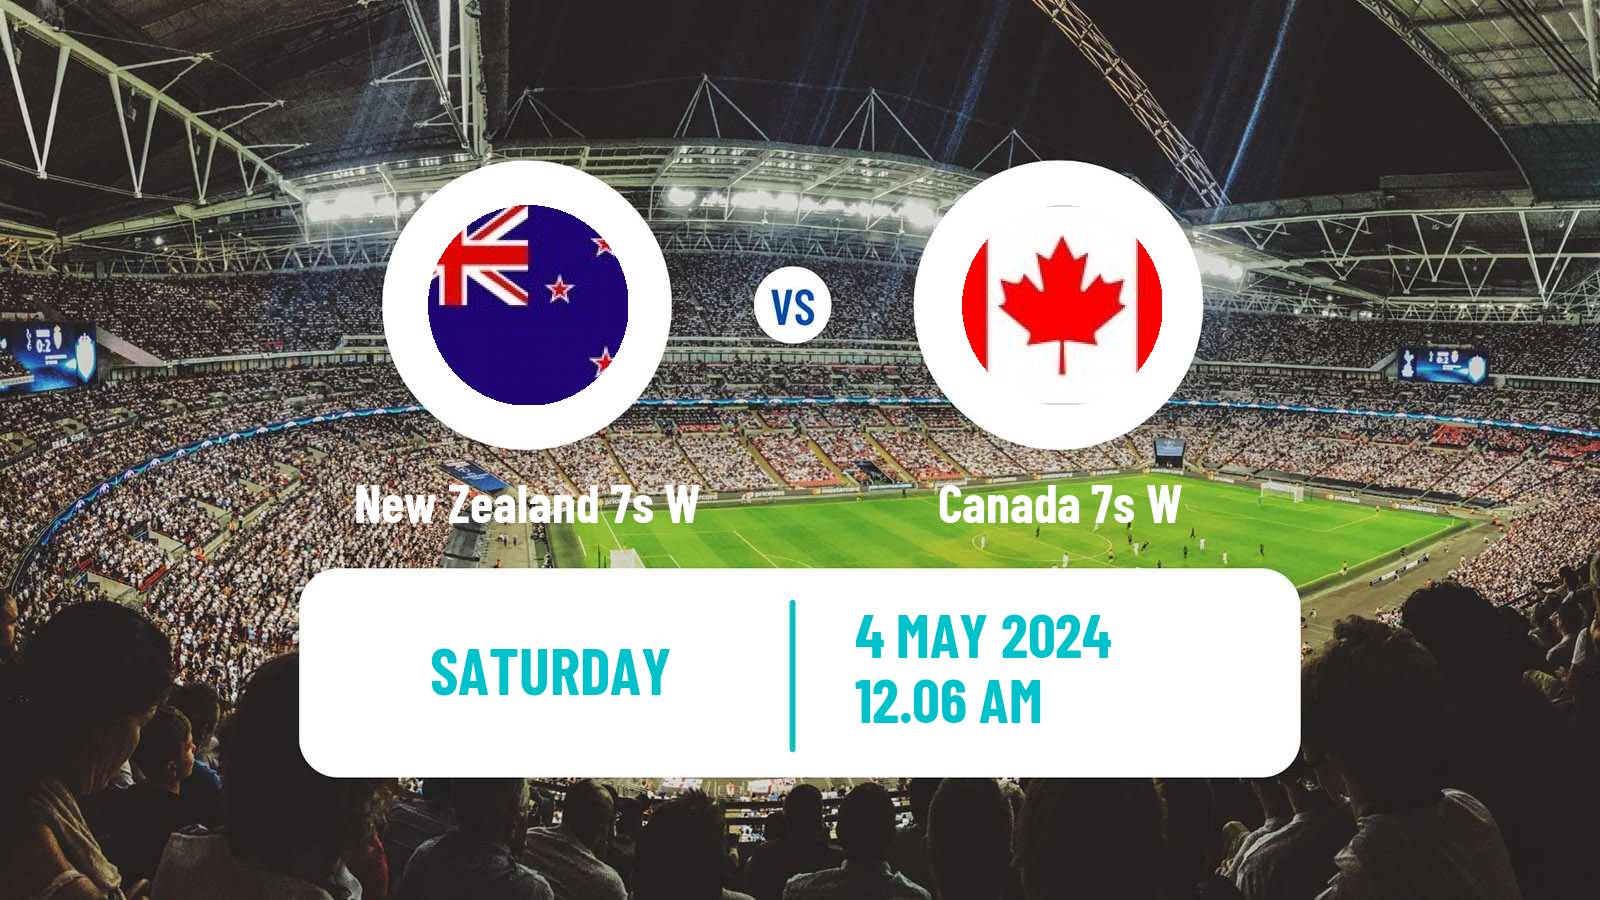 Soccer Sevens World Series Women - Singapore New Zealand 7s W - Canada 7s W